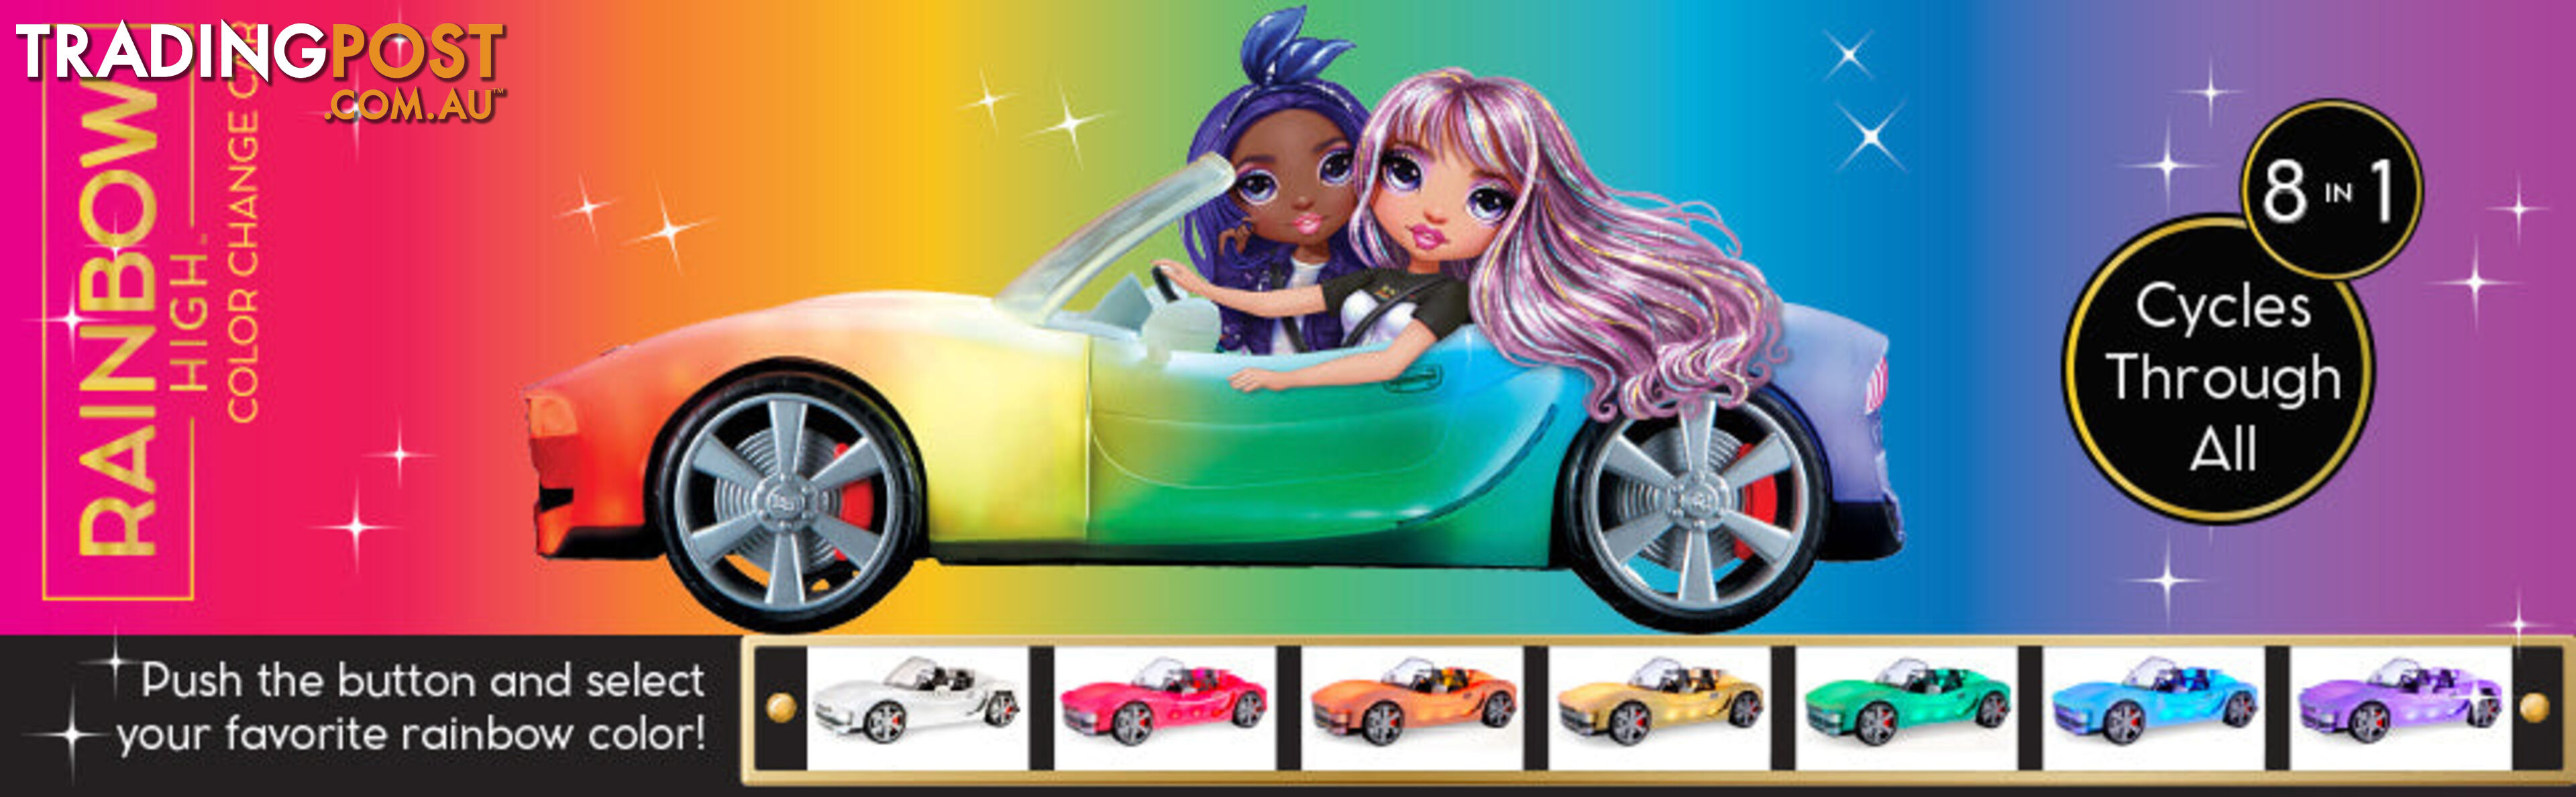 Rainbow High - Convertible Color Change Car - Bj574316 - 035051574316